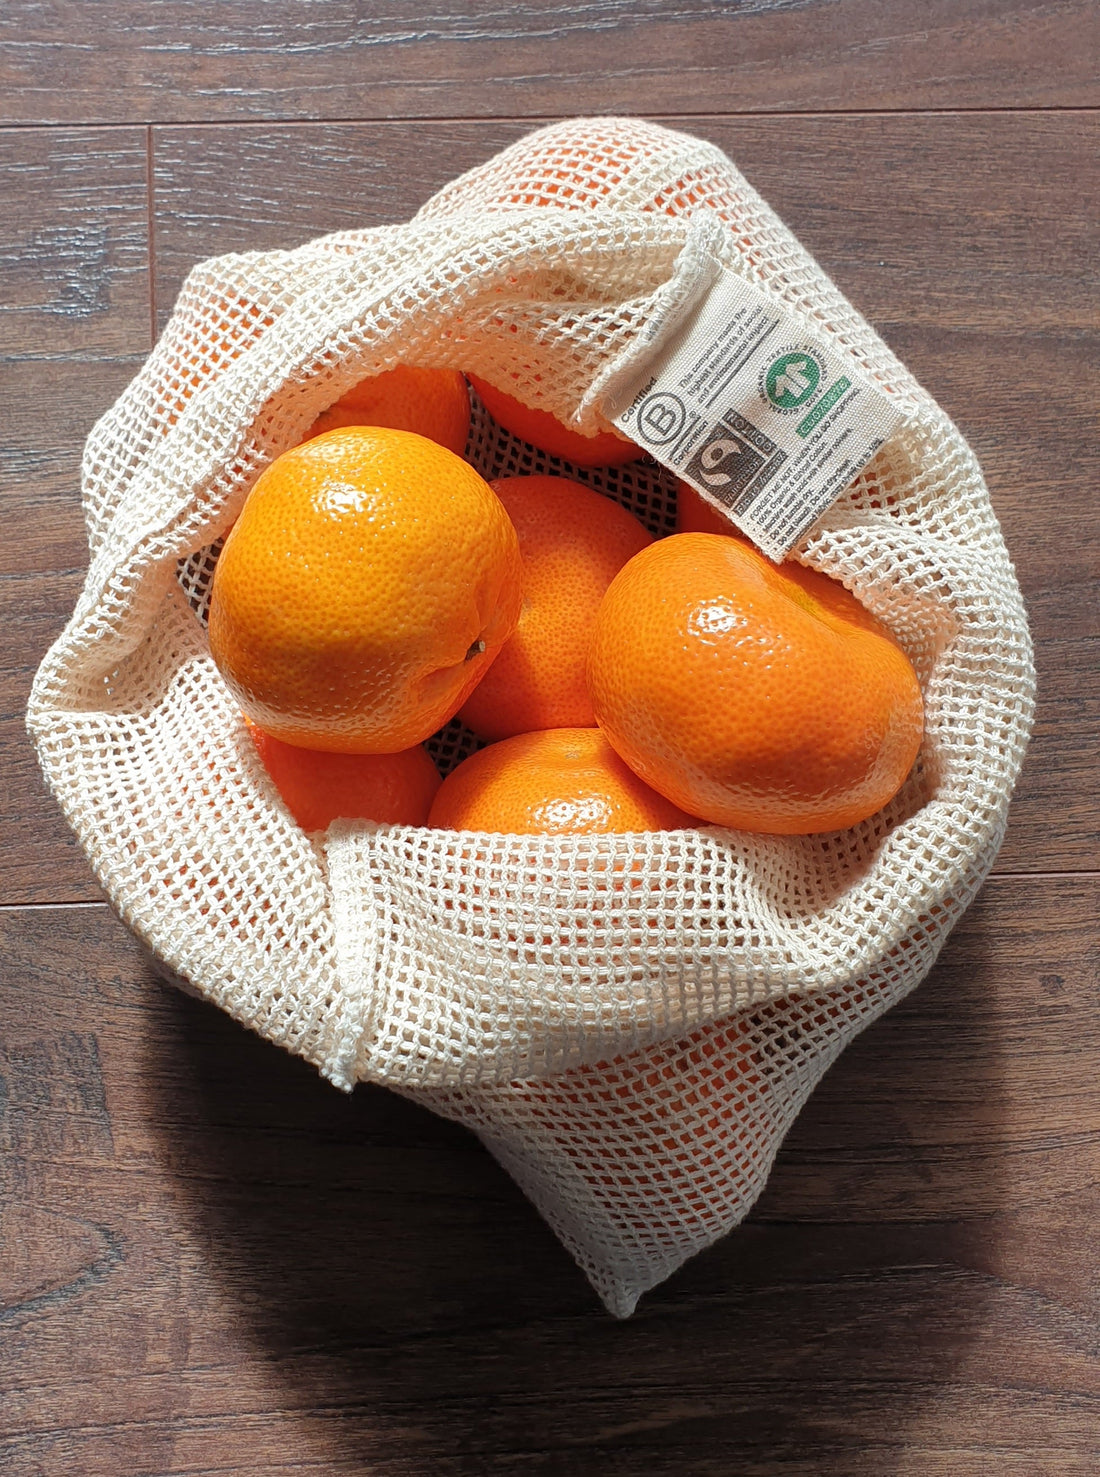 10 Reasons Why You Need a Reusable Produce Bag